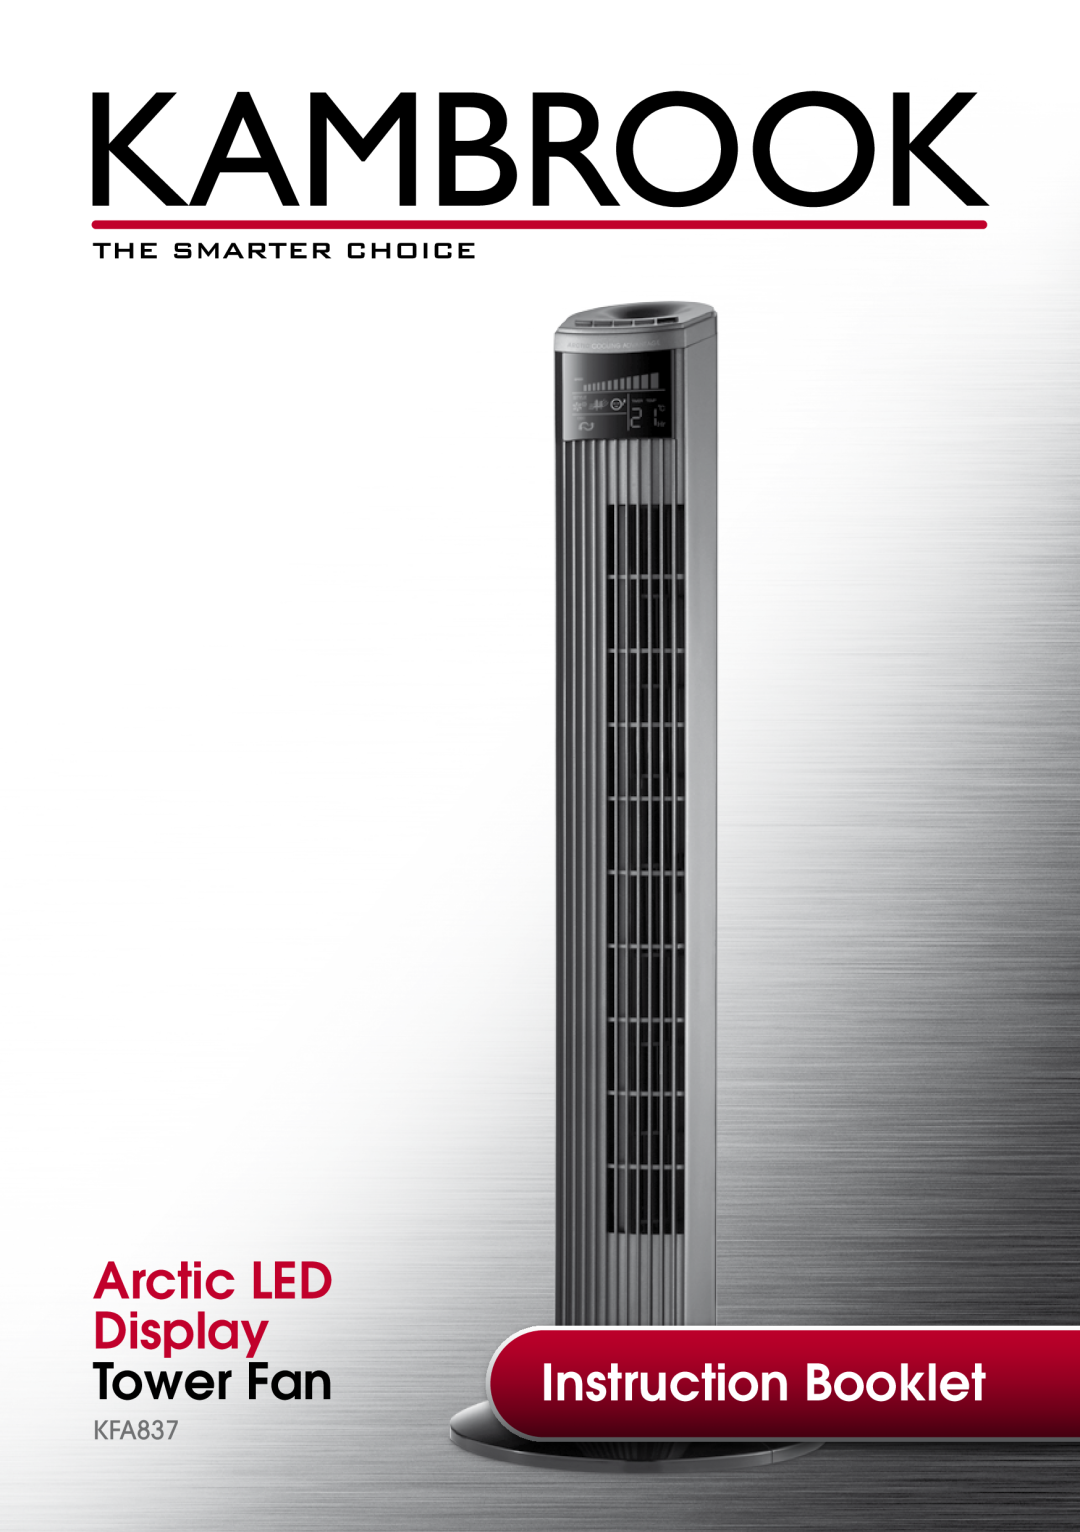 Kambrook KFA837 manual Arctic LED, Display, Tower Fan, Instruction Booklet 